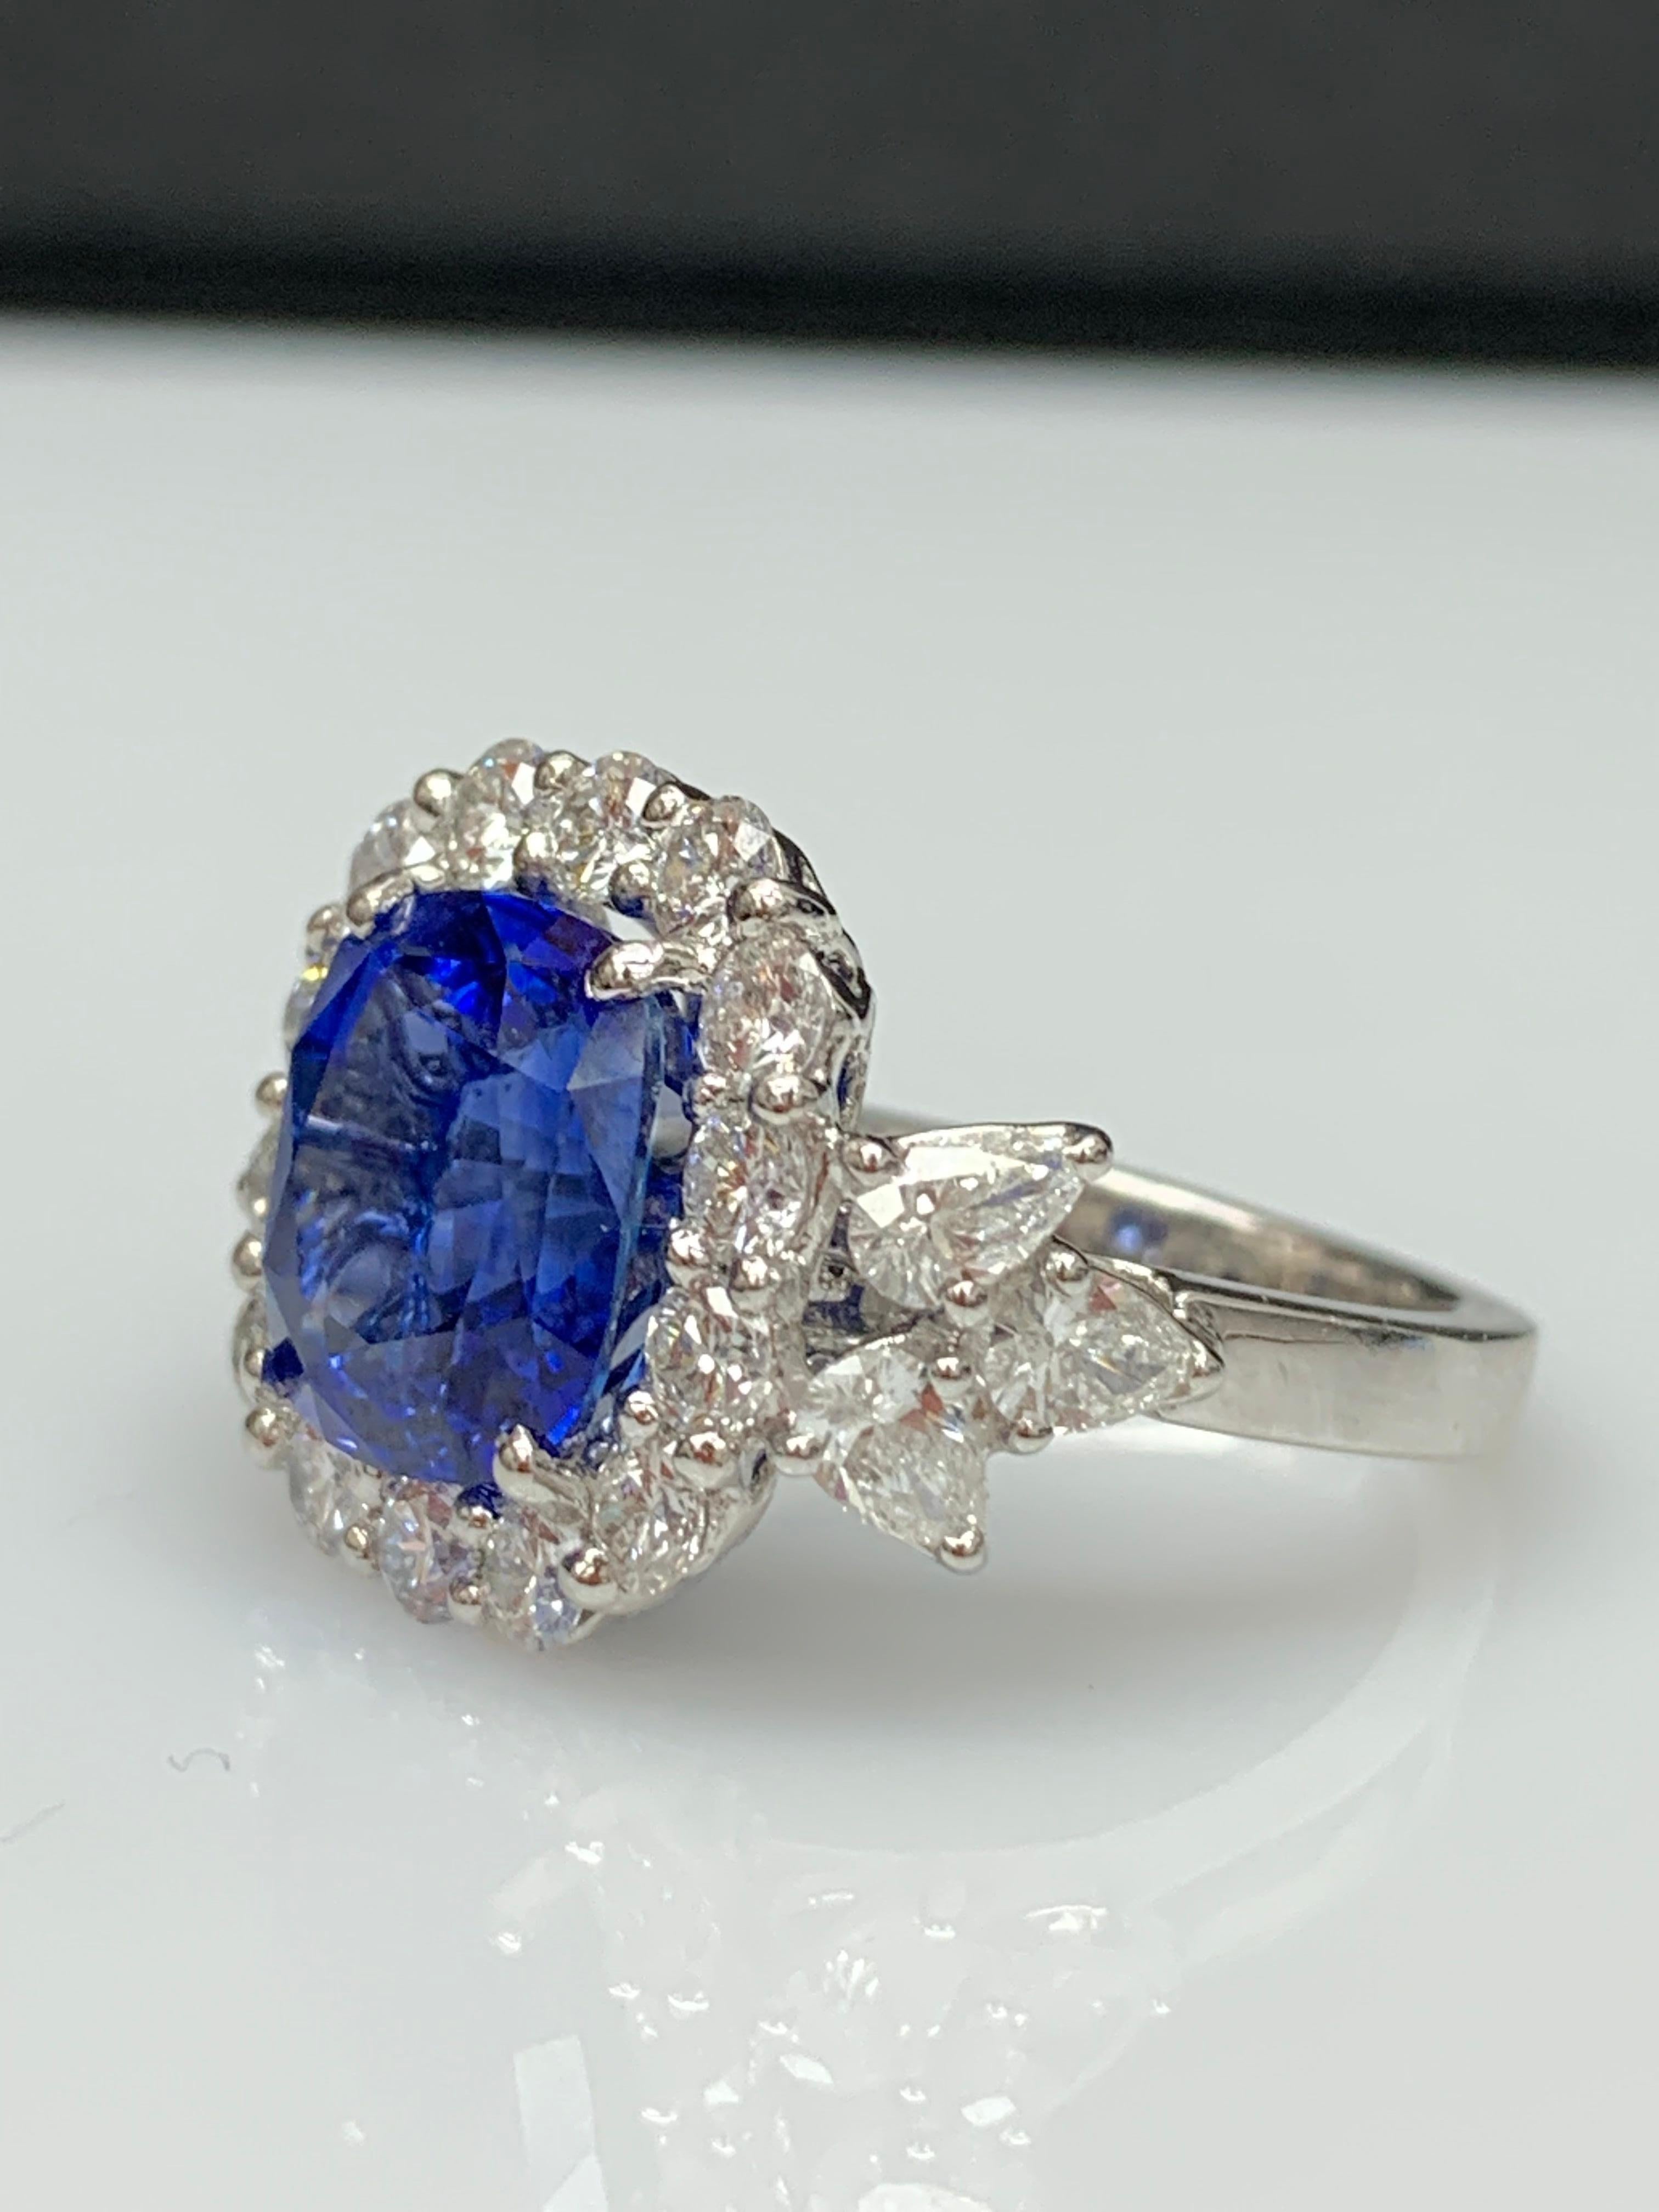 6.61 Carat Cushion Cut Blue Sapphire Diamond Engagement Ring in Platinum For Sale 10